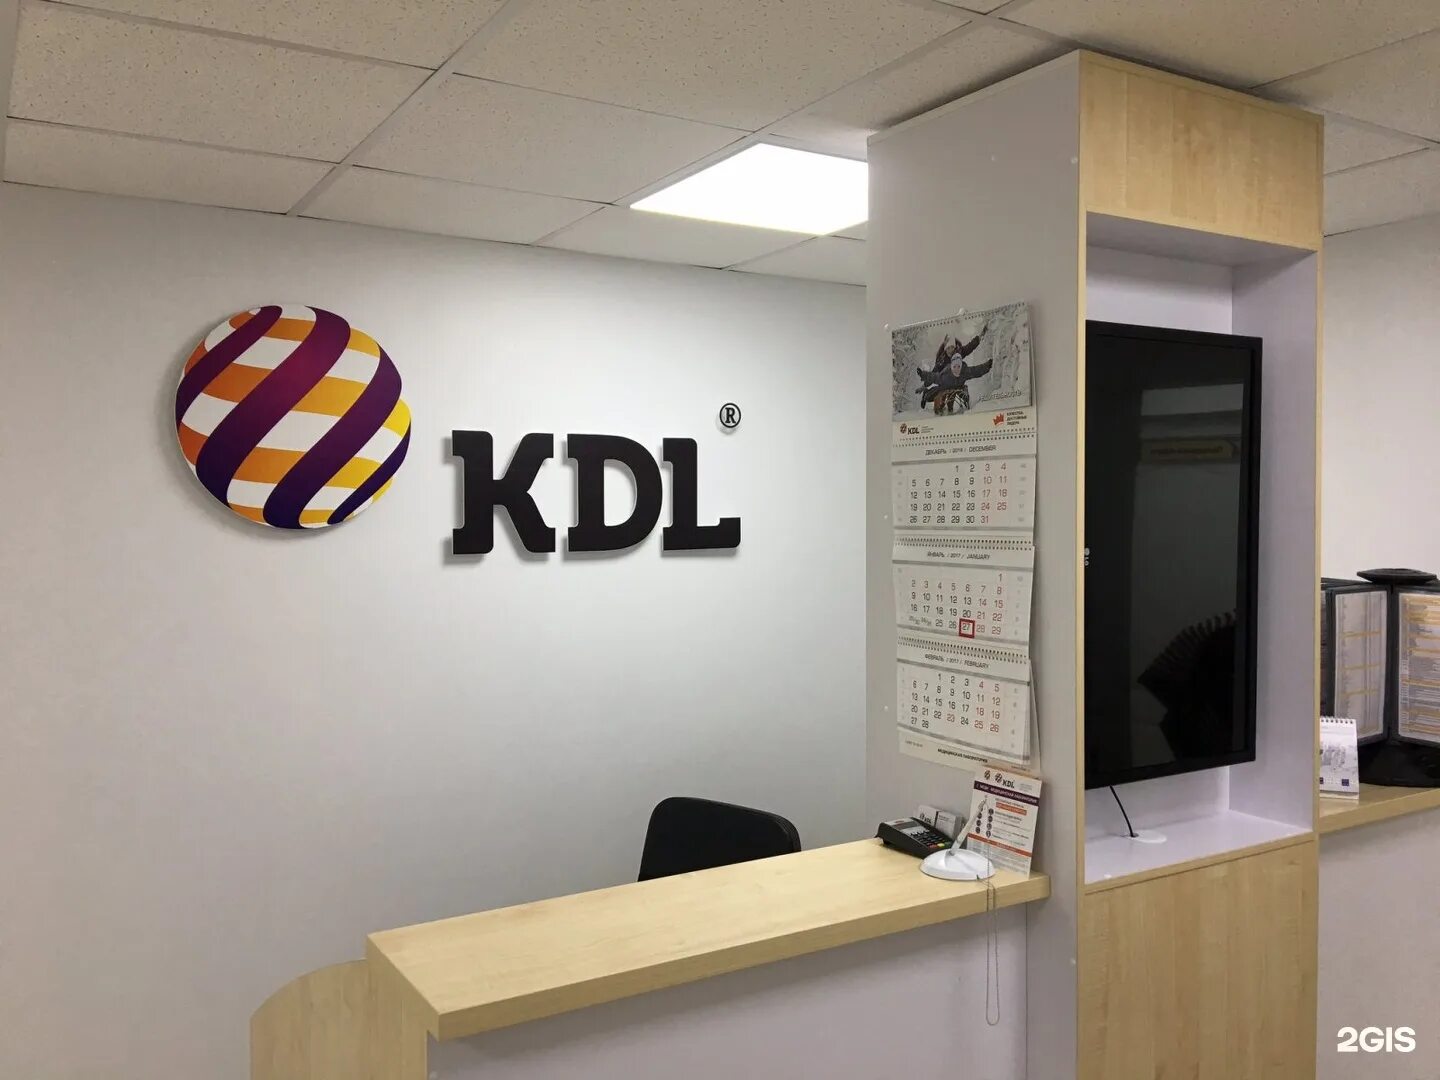 Кдл ленинский. КДЛ лаборатория Омск. KDL логотип. Эмблема КДЛ лаборатории. KDL В Омске.